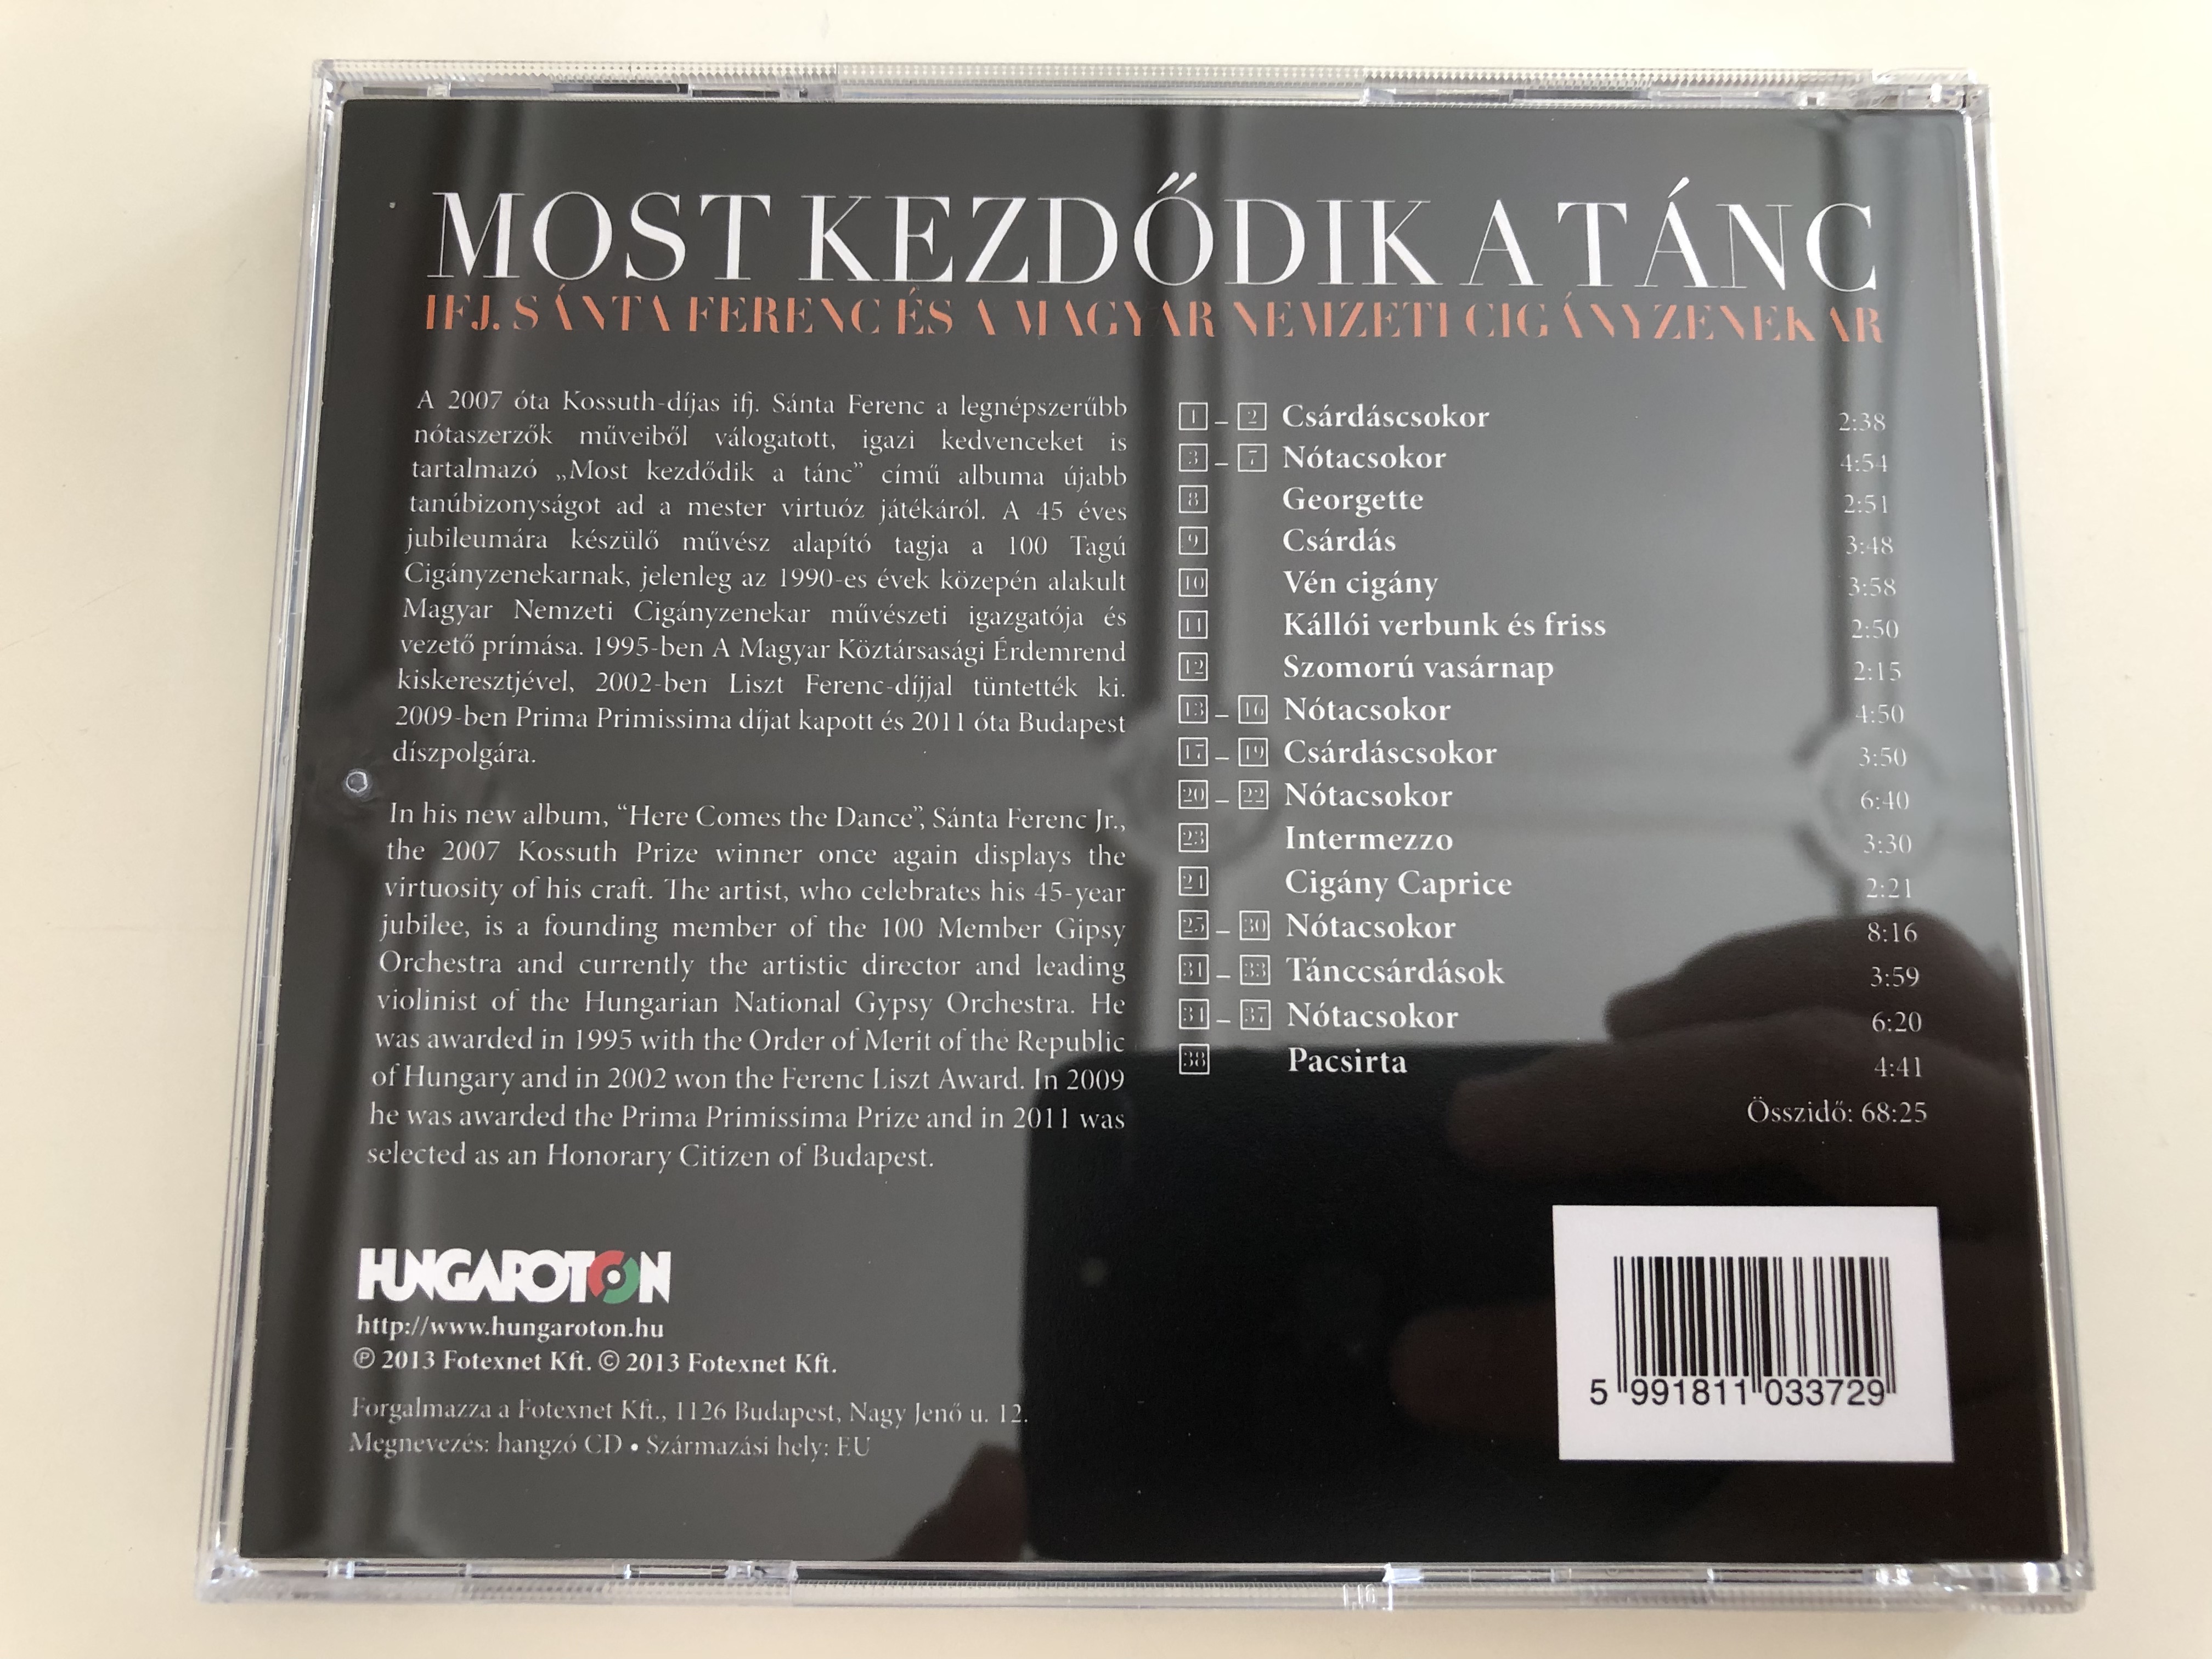 ifj.-s-nta-ferenc-s-a-magyar-nemzeti-cig-nyzenekar-most-kezd-dik-a-t-nc-hungaroton-audio-cd-2013-hcd-10337-6-.jpg